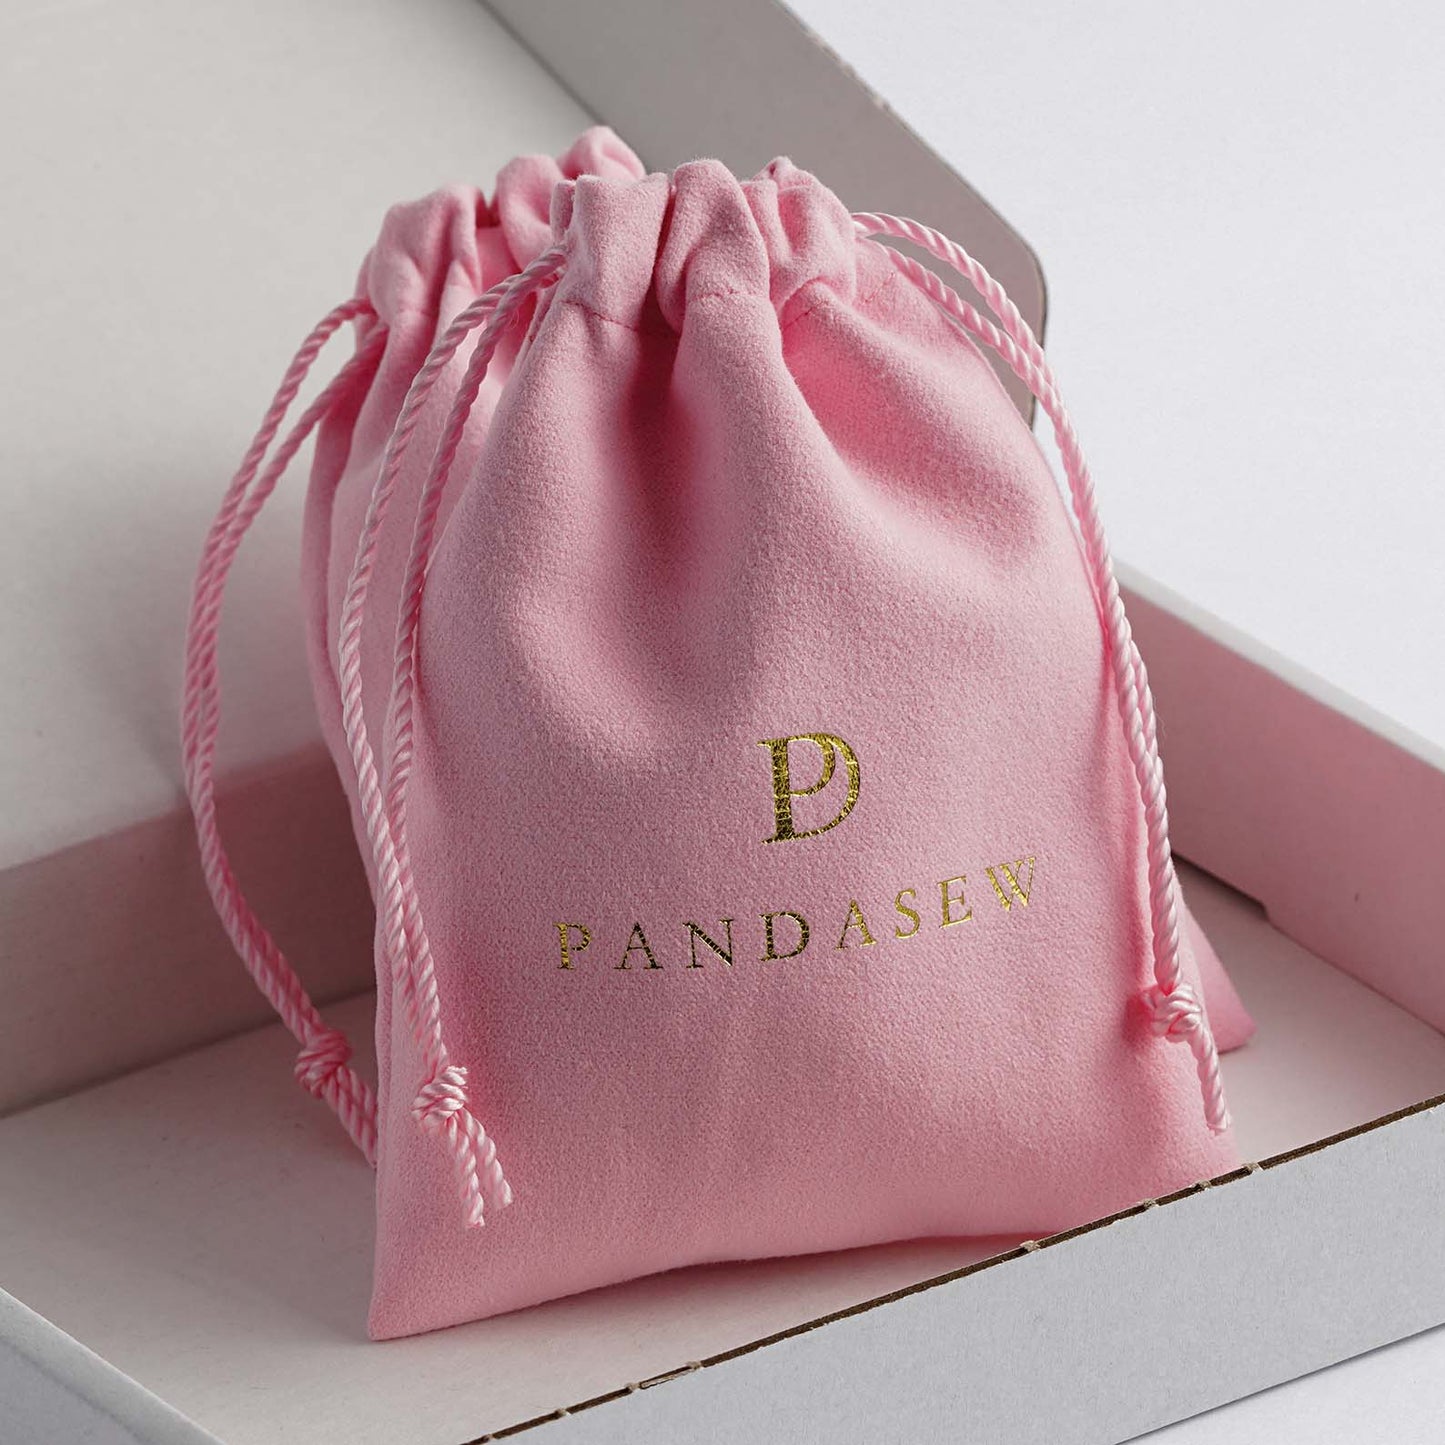 Pandasew Custom Logo 100PCS Velvet Jewelry Drawstring Bags Generic Top VEL-102